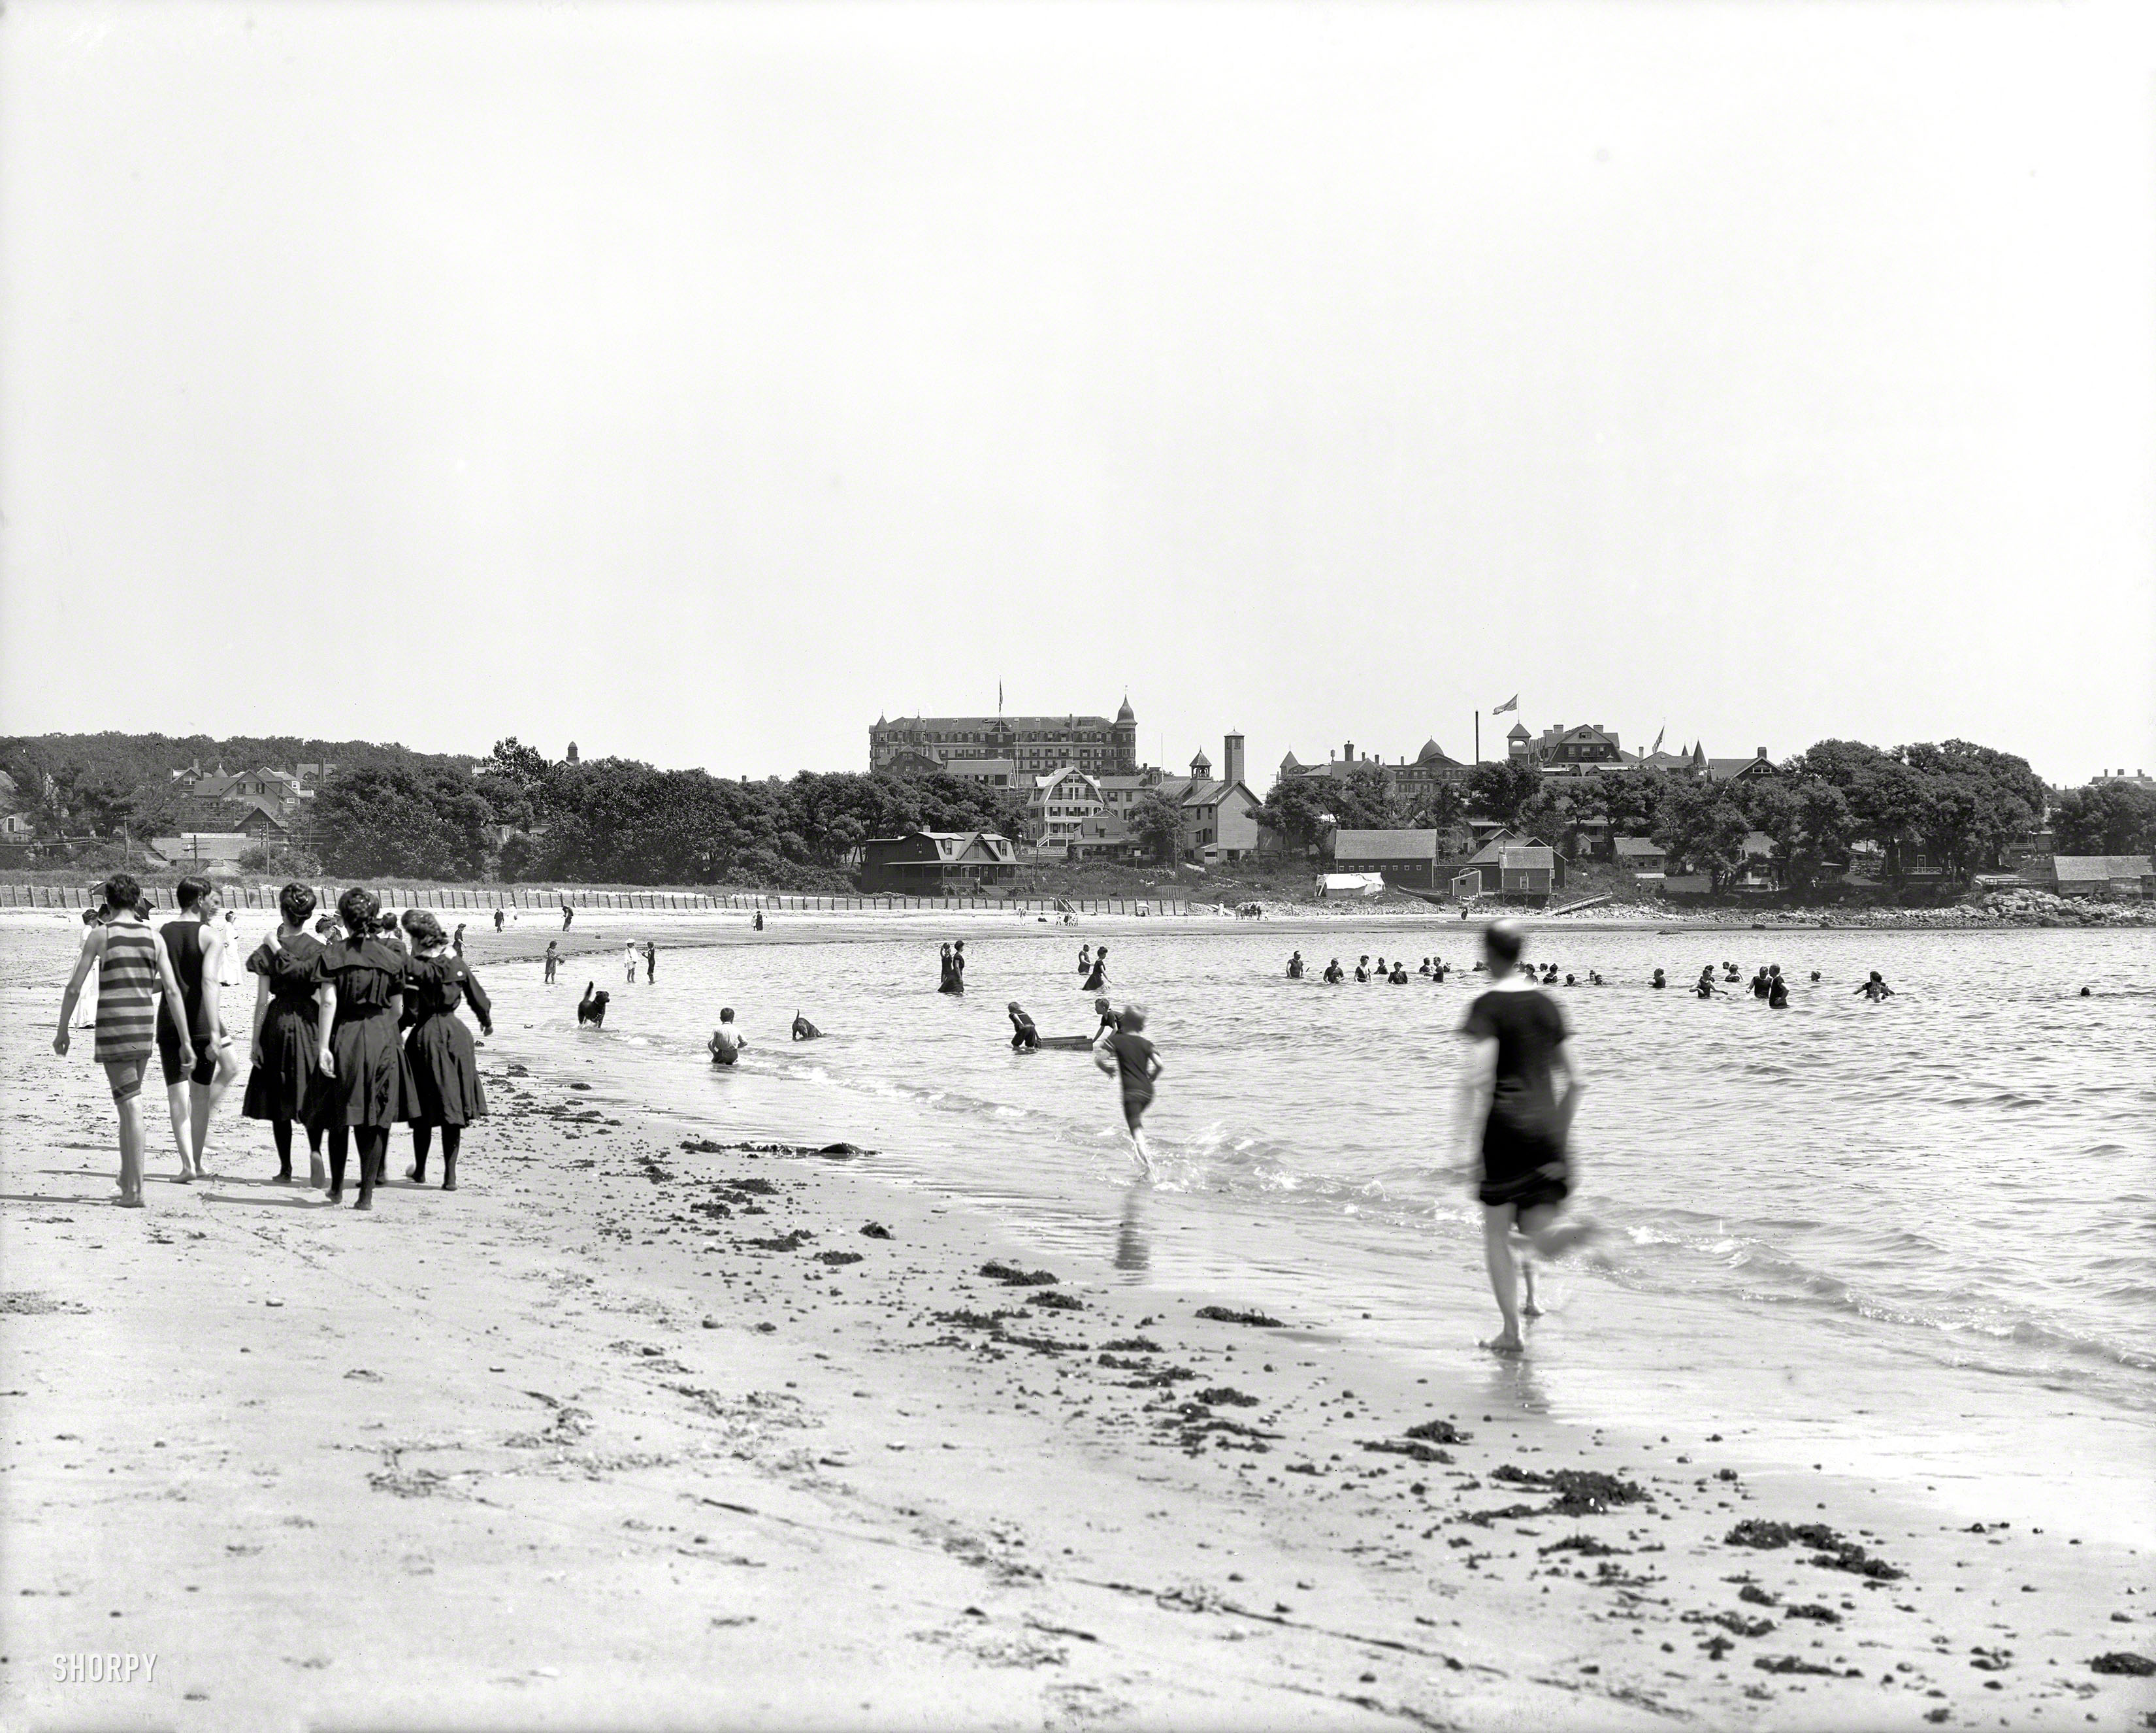 Circa 1906. "The bathing beach at Magnolia, Massachusetts." 8x10 inch dry plate glass negative, Detroit Publishing Company. View full size.